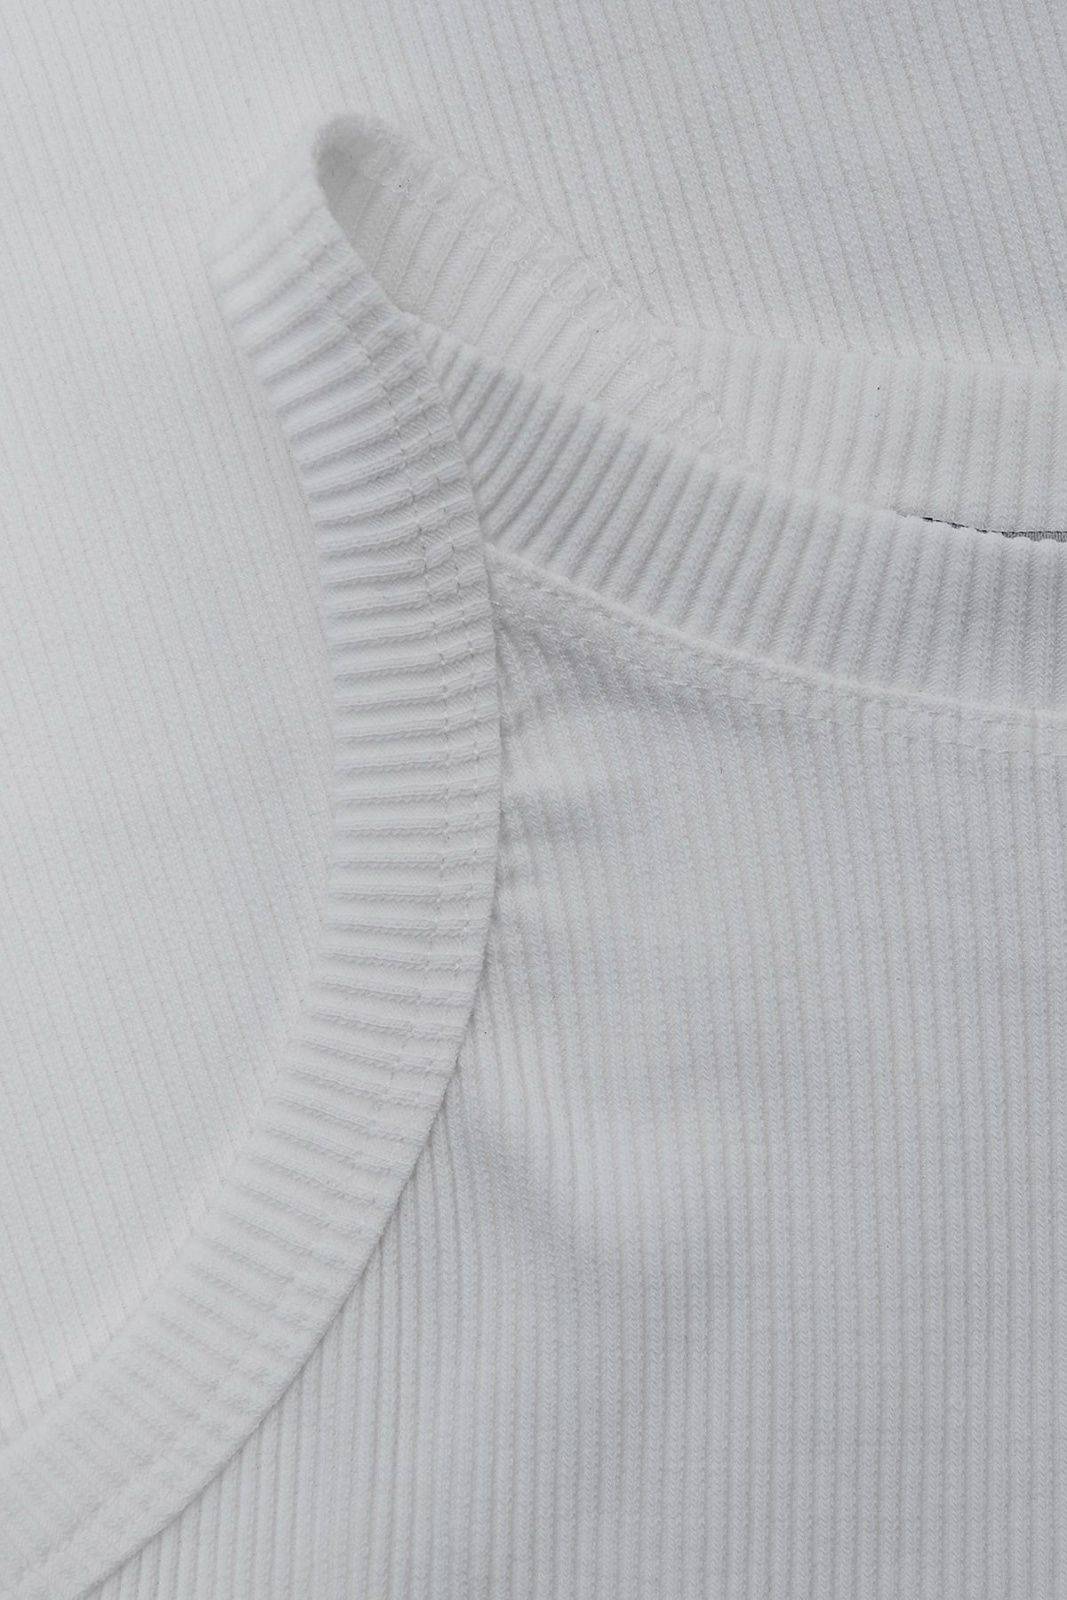 Les Goodies - Elementy Wear Raider White Top